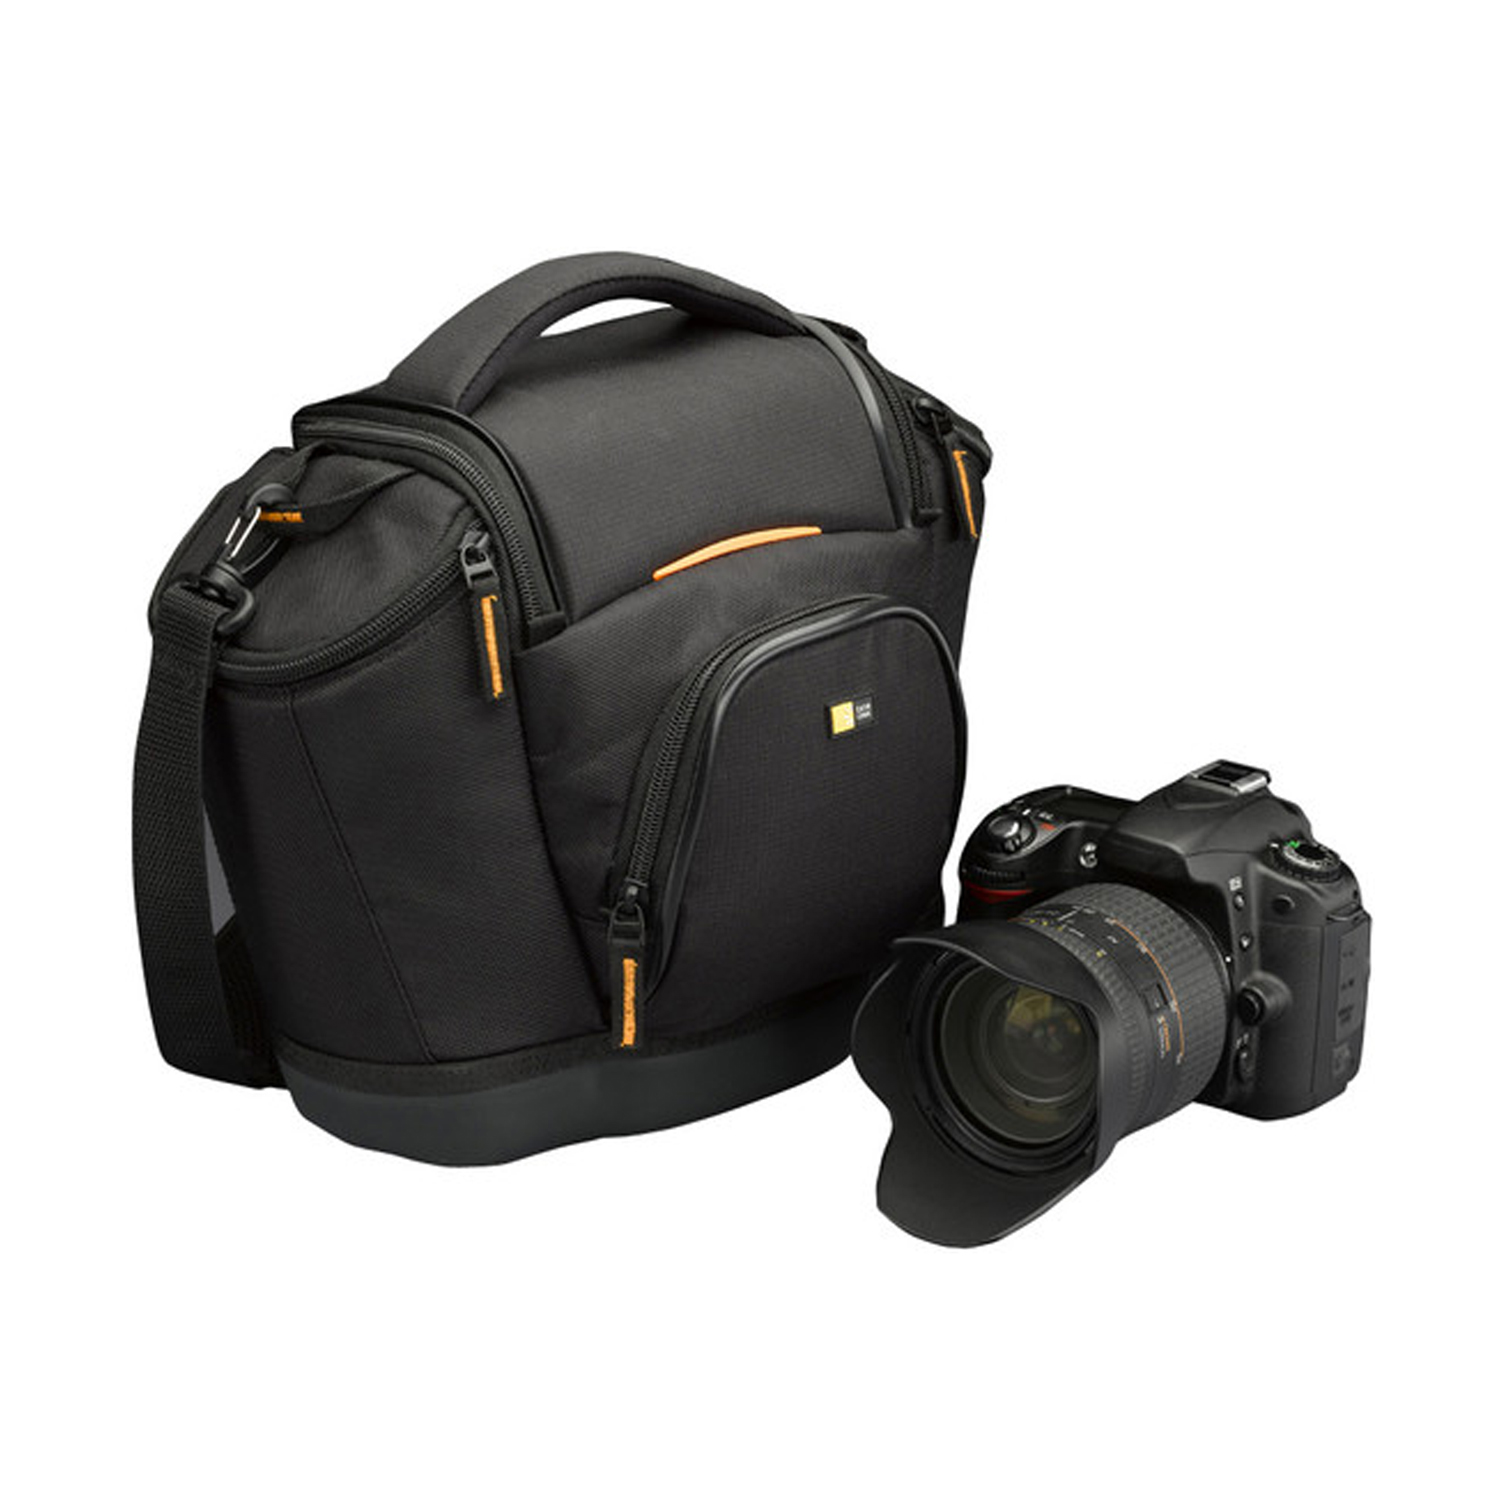 Case Logic Medium SLR Camera Bag, Black - image 2 of 5